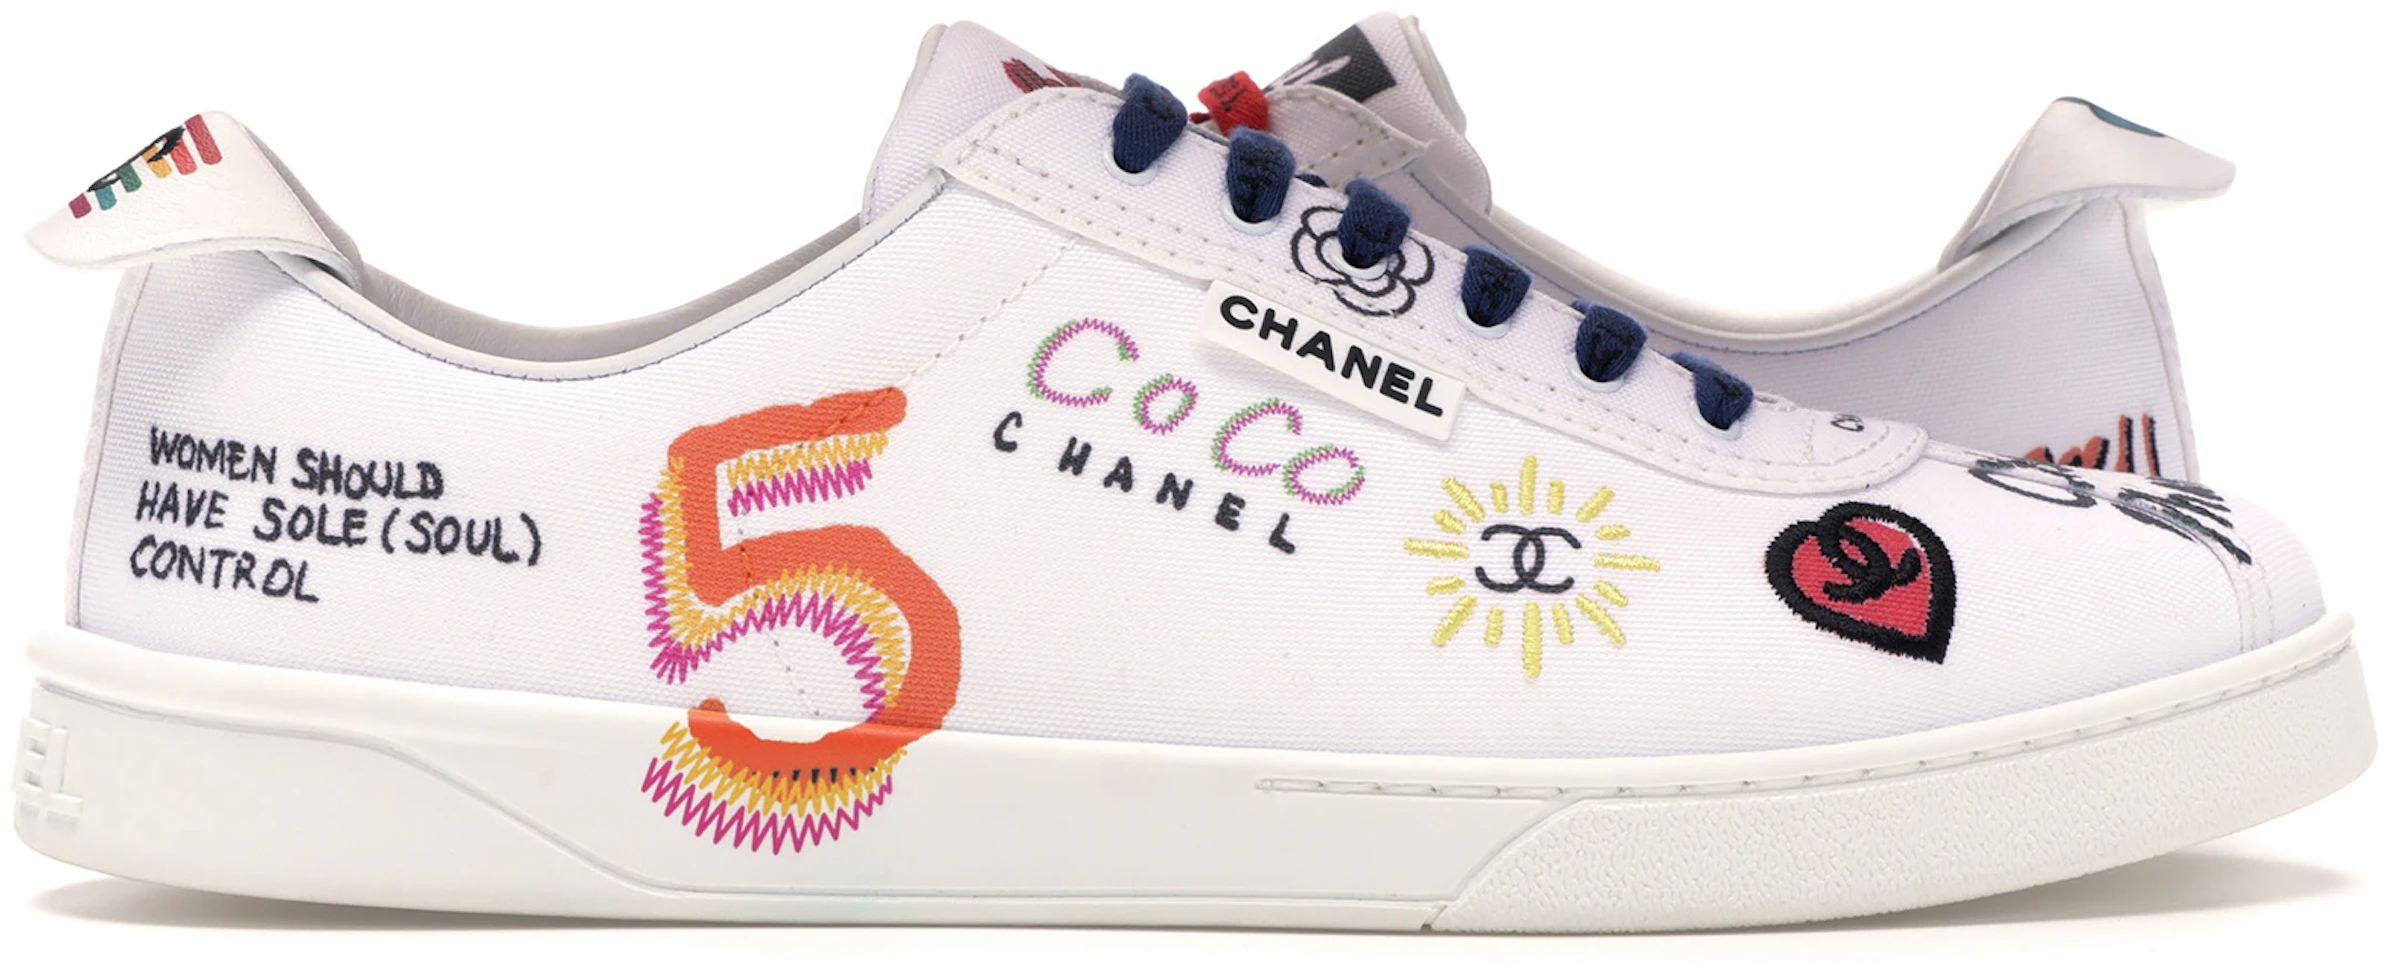 Buy Chanel Sneakers - StockX